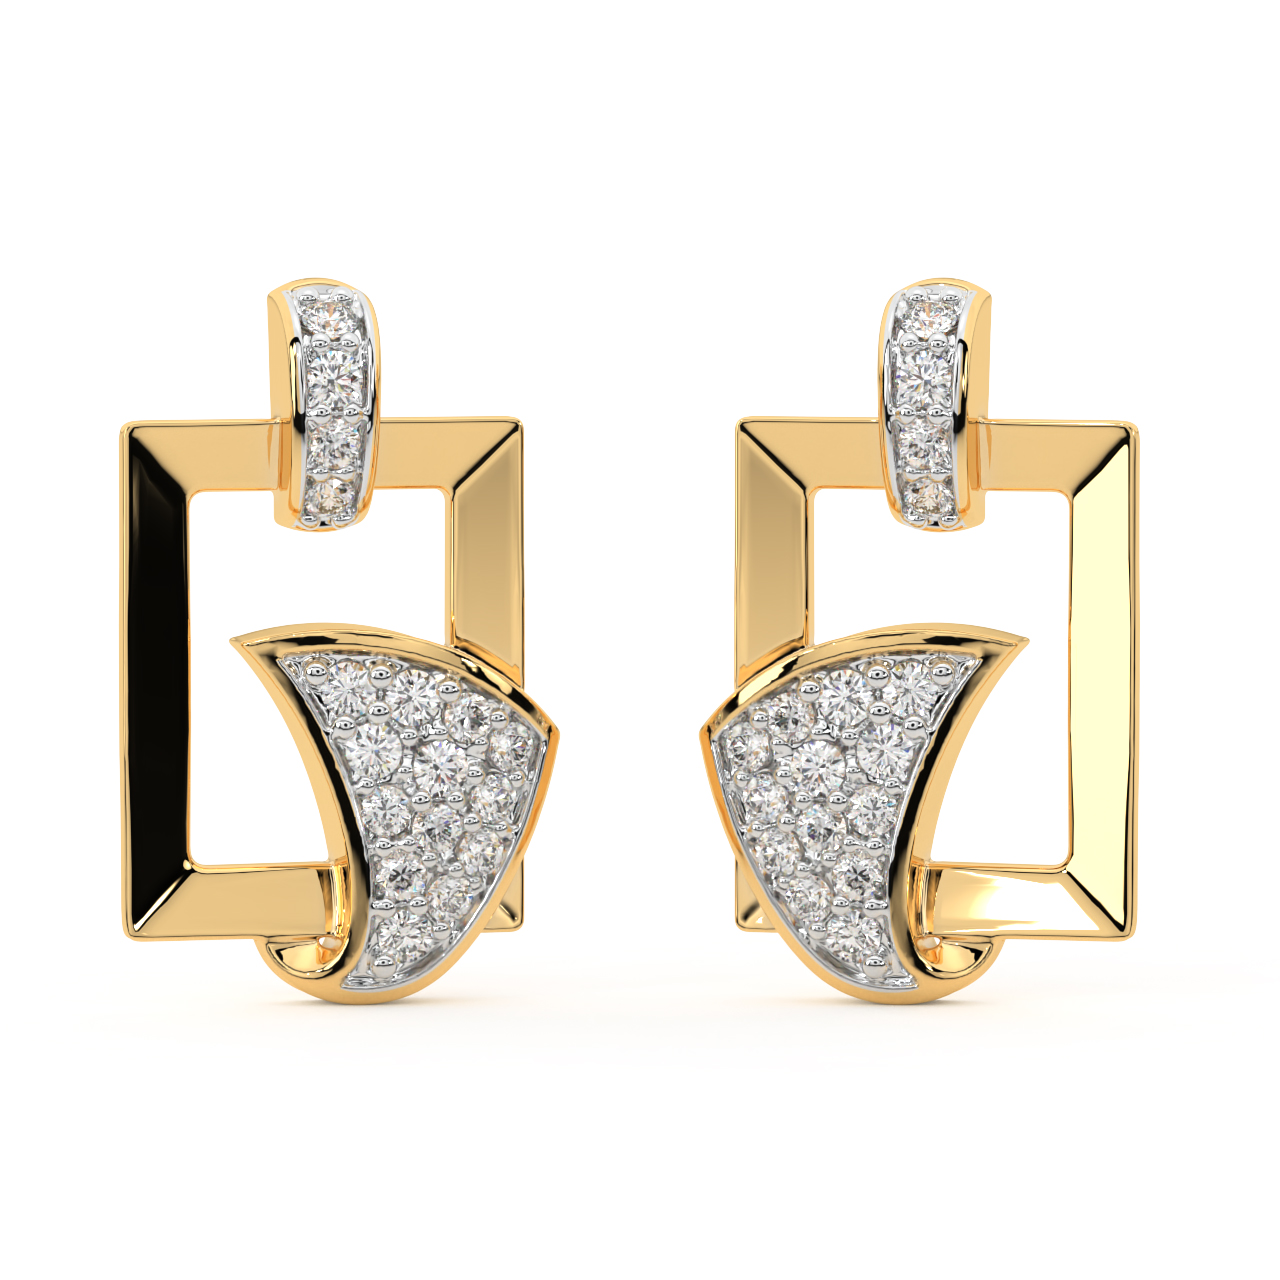 Diamond Pendant Set Design In Gold